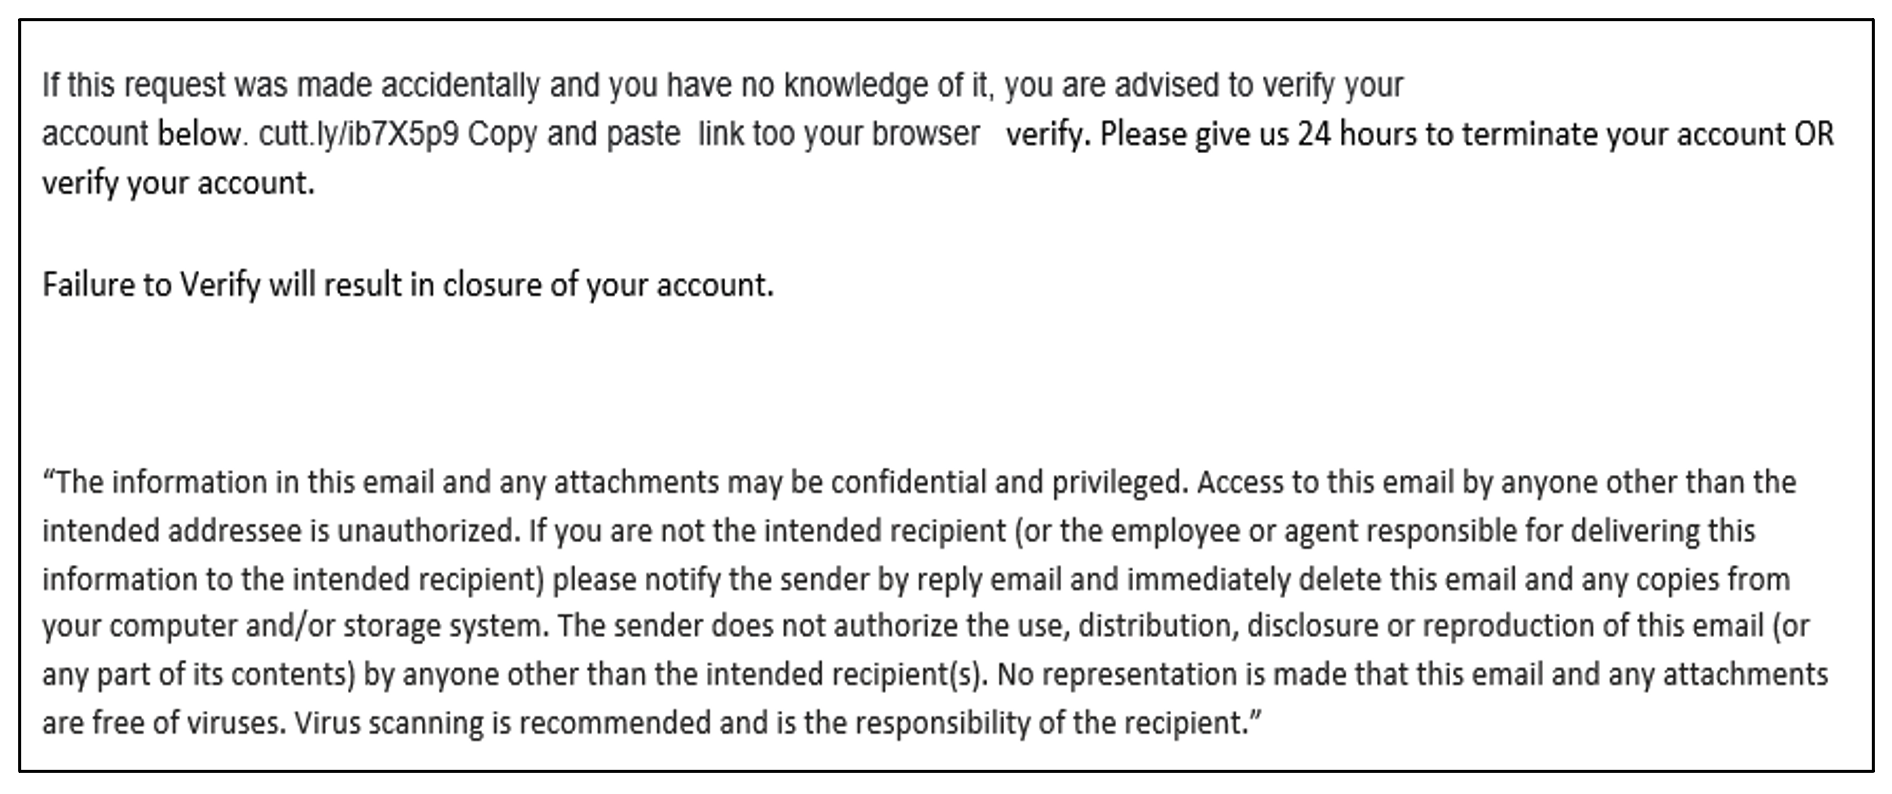 example of account closure phishing email